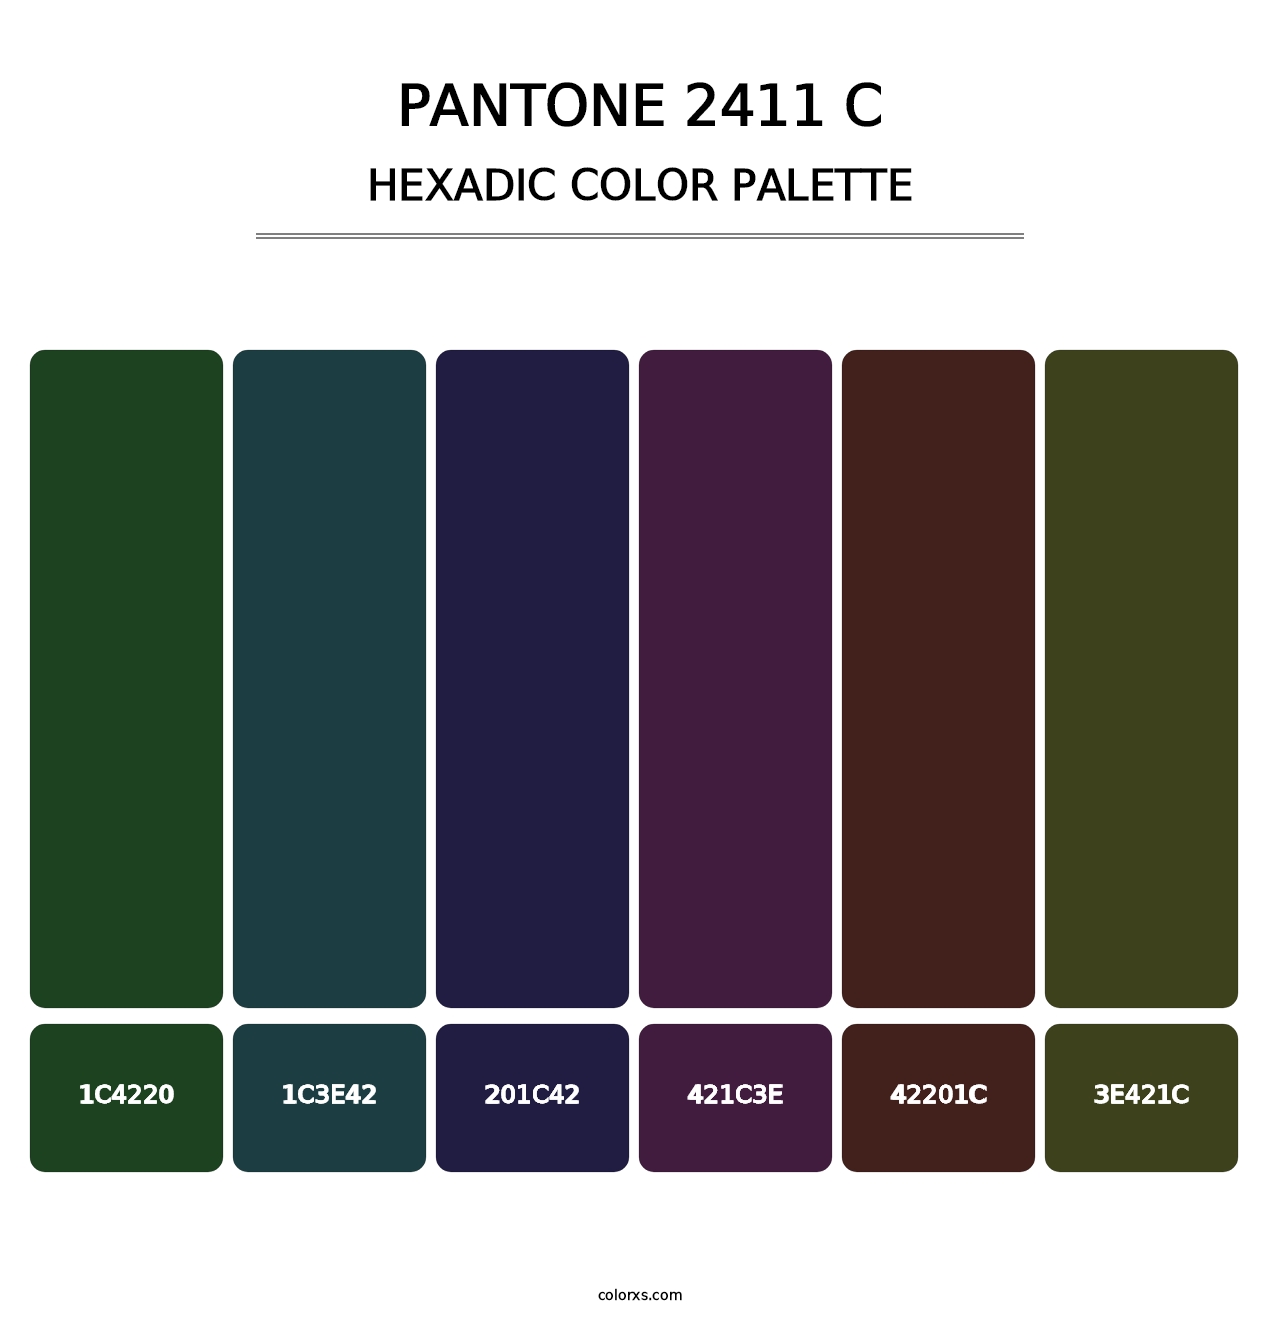 PANTONE 2411 C - Hexadic Color Palette